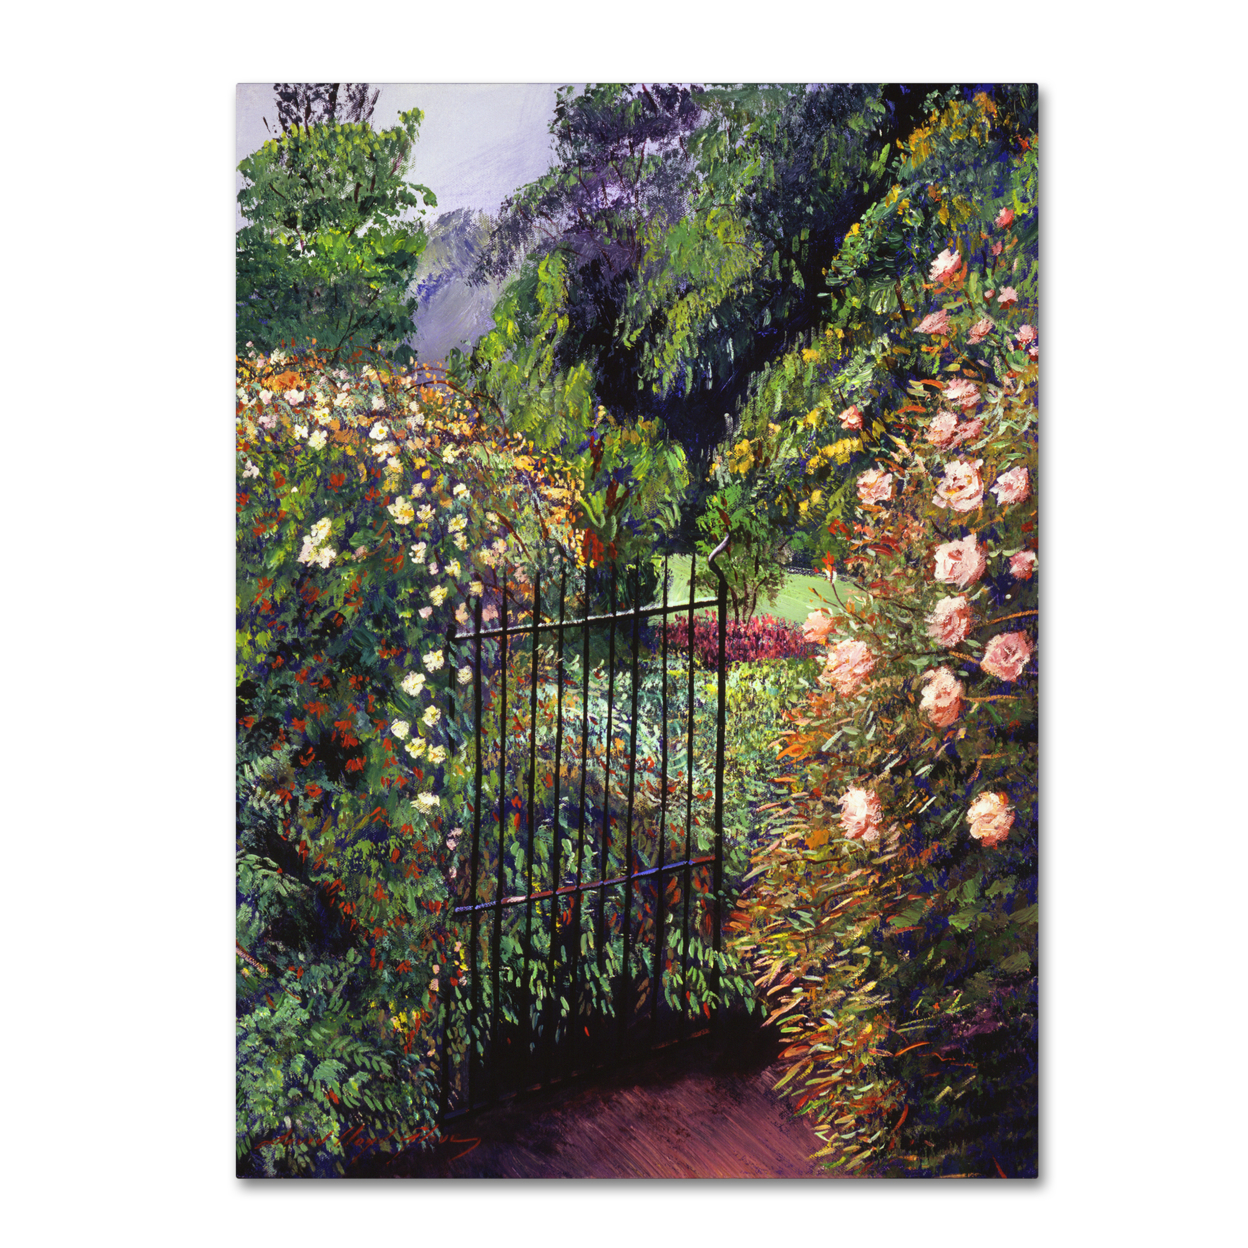 David Lloyd Glover 'Quiet Garden Entrance' Canvas Wall Art 35 X 47 Inches